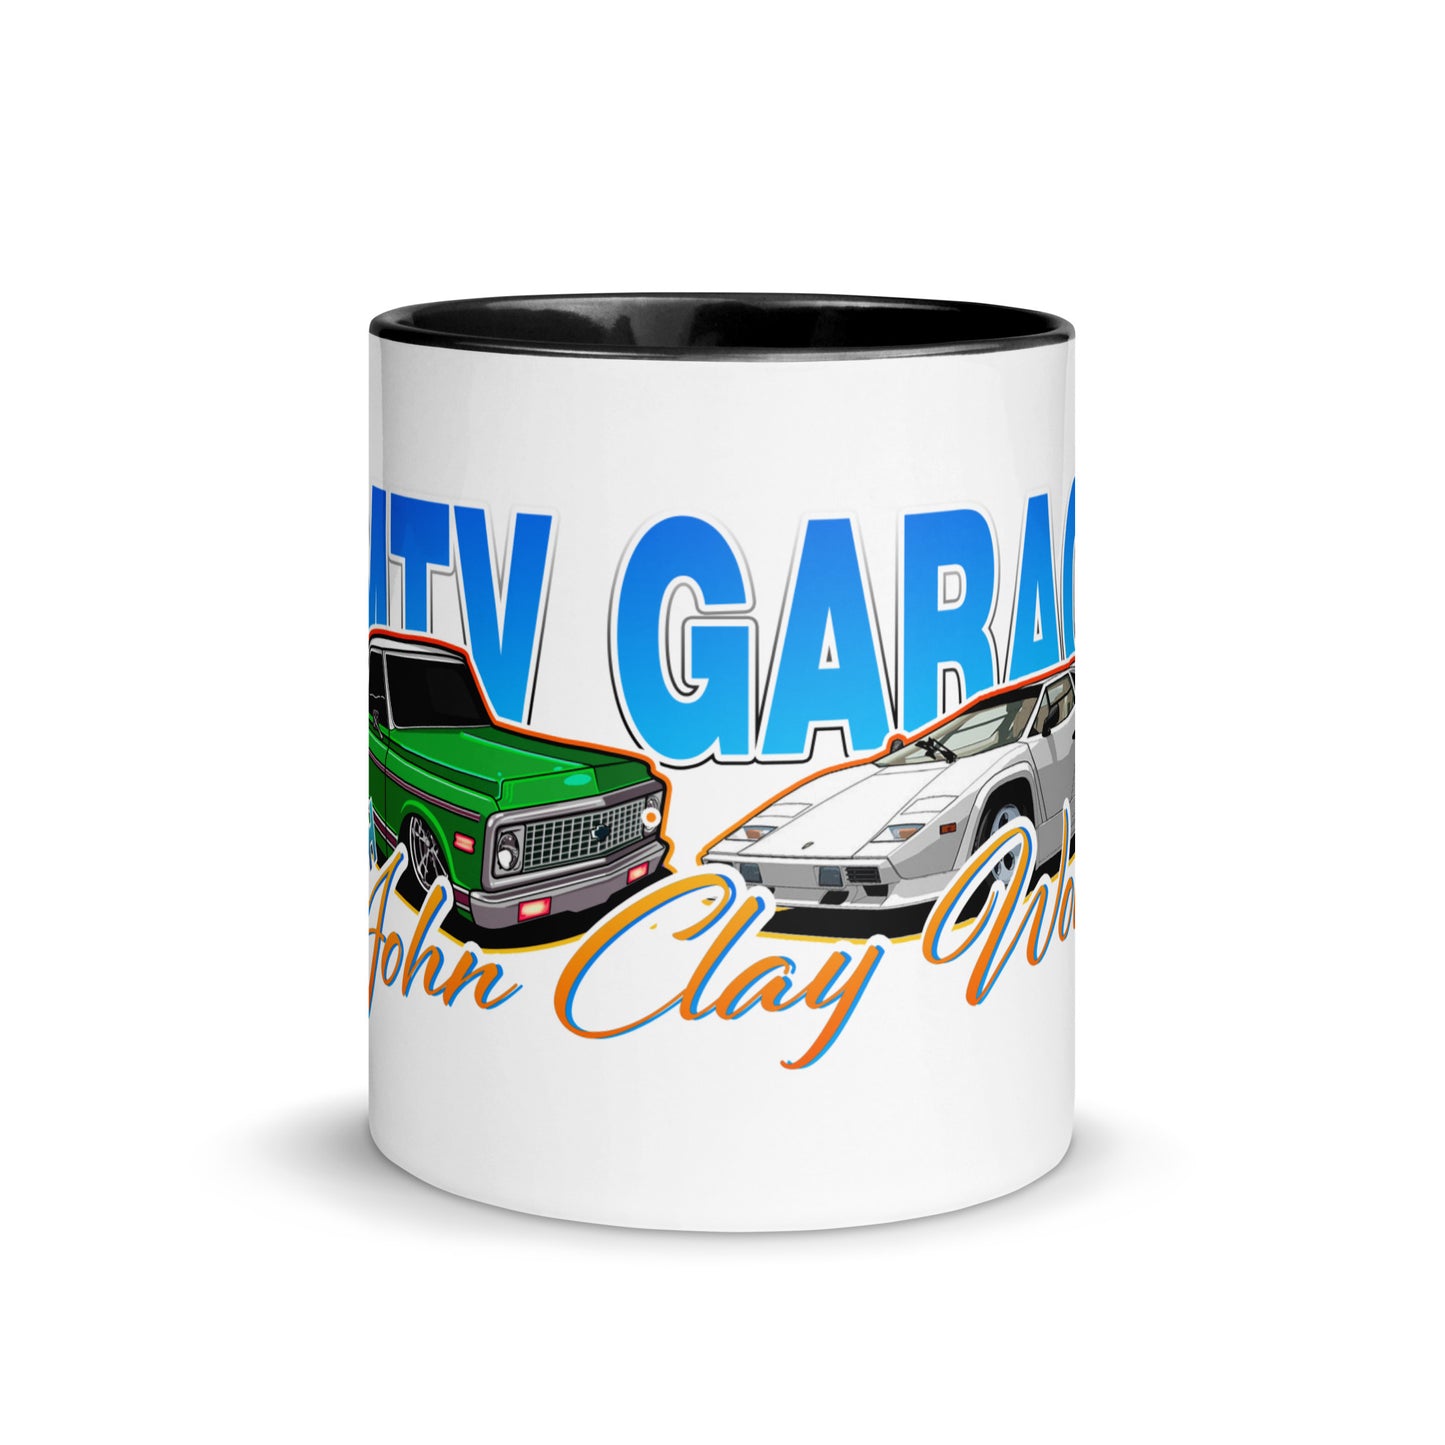 GMTV Garage Mug